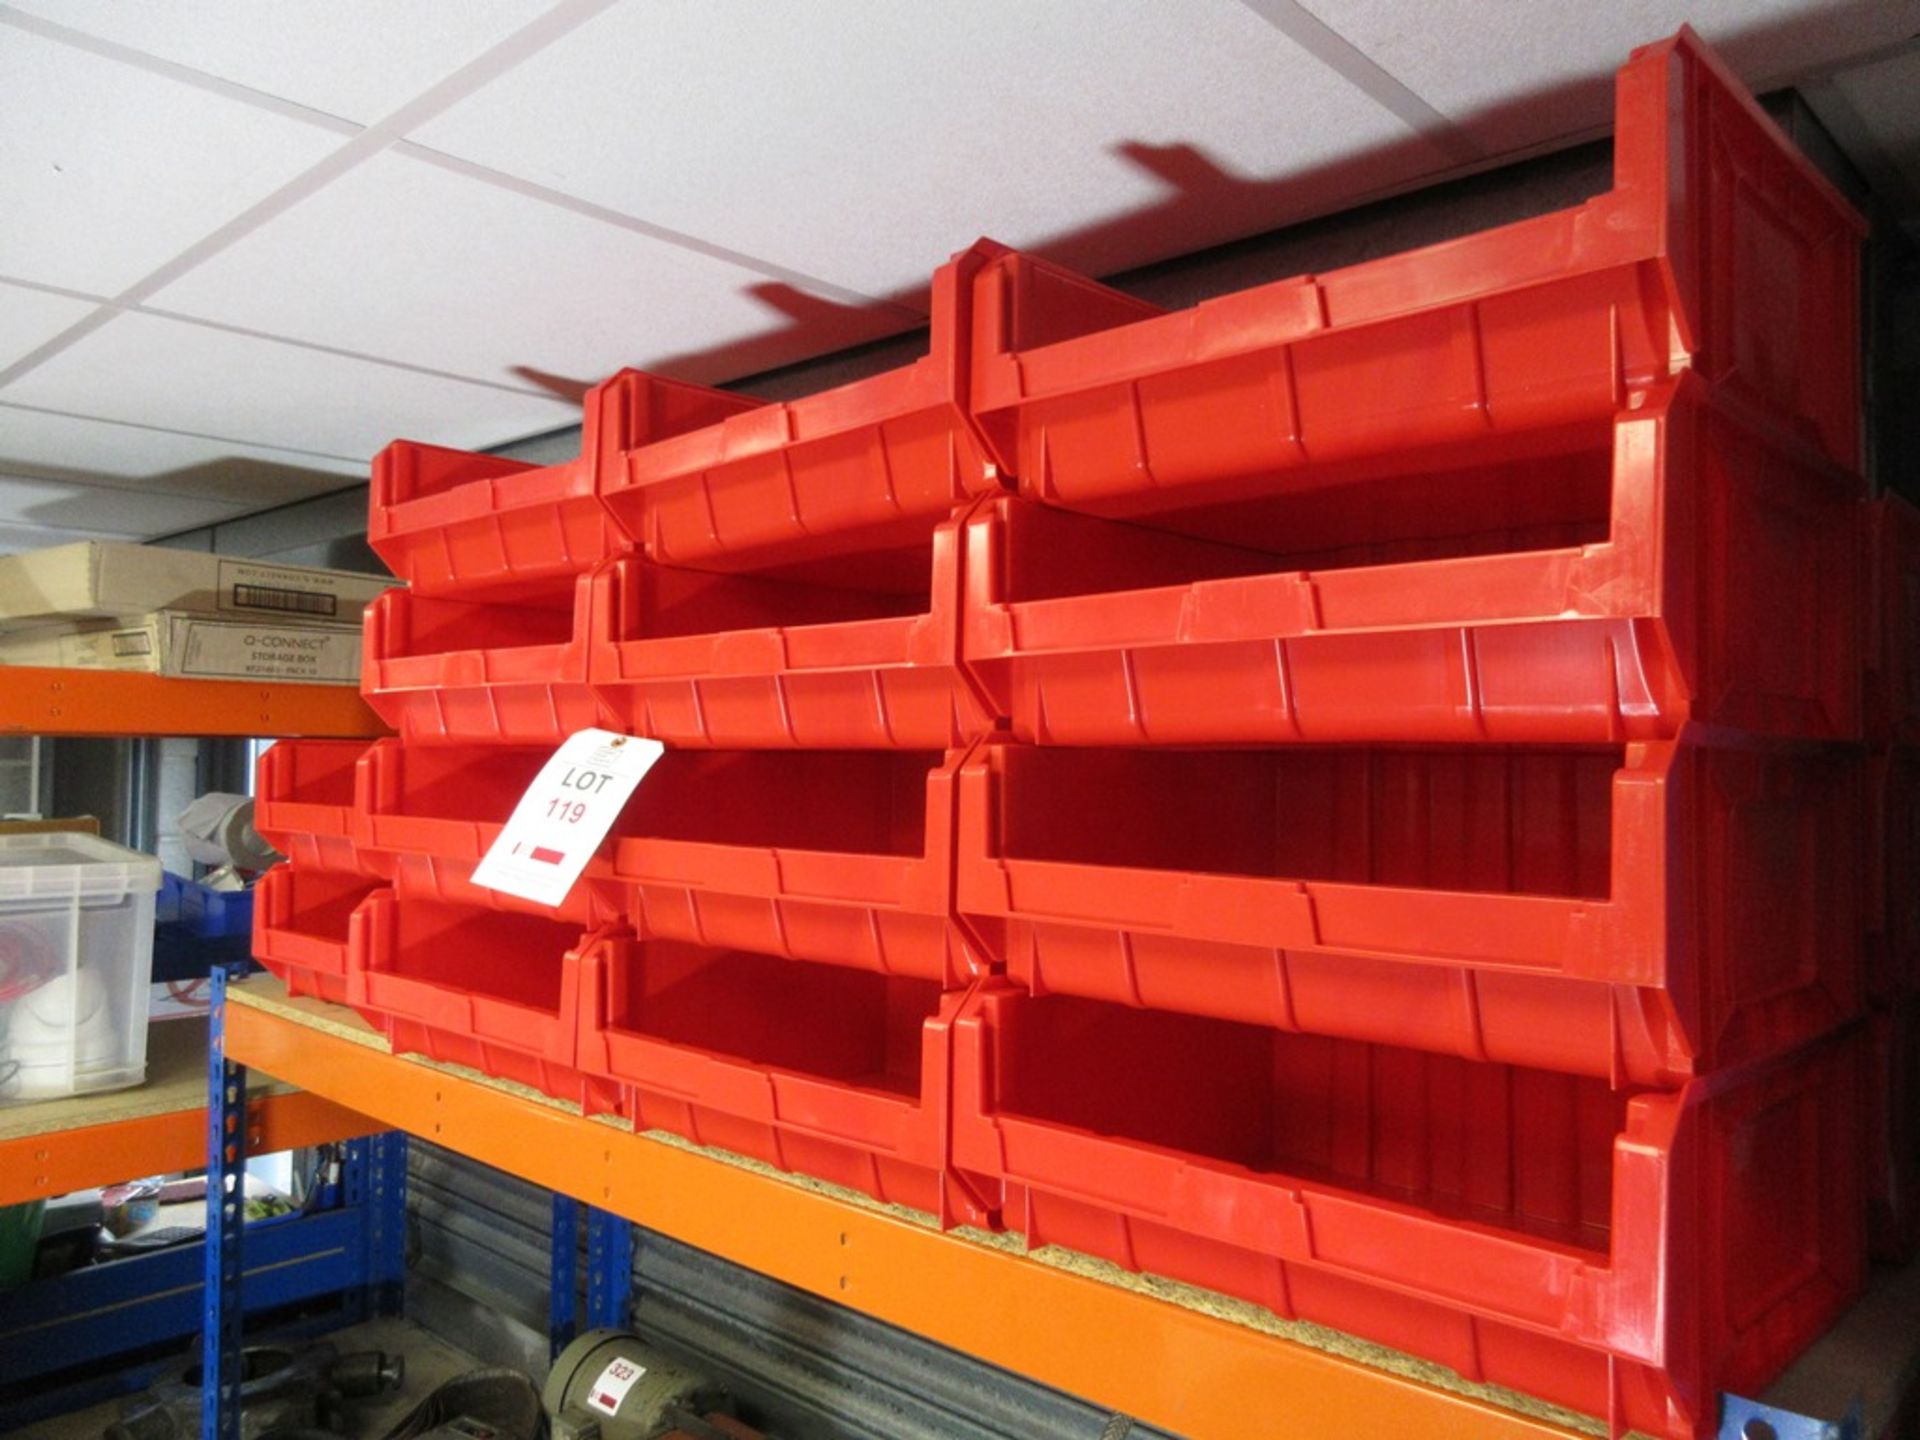 Twenty-Three Red storage bins